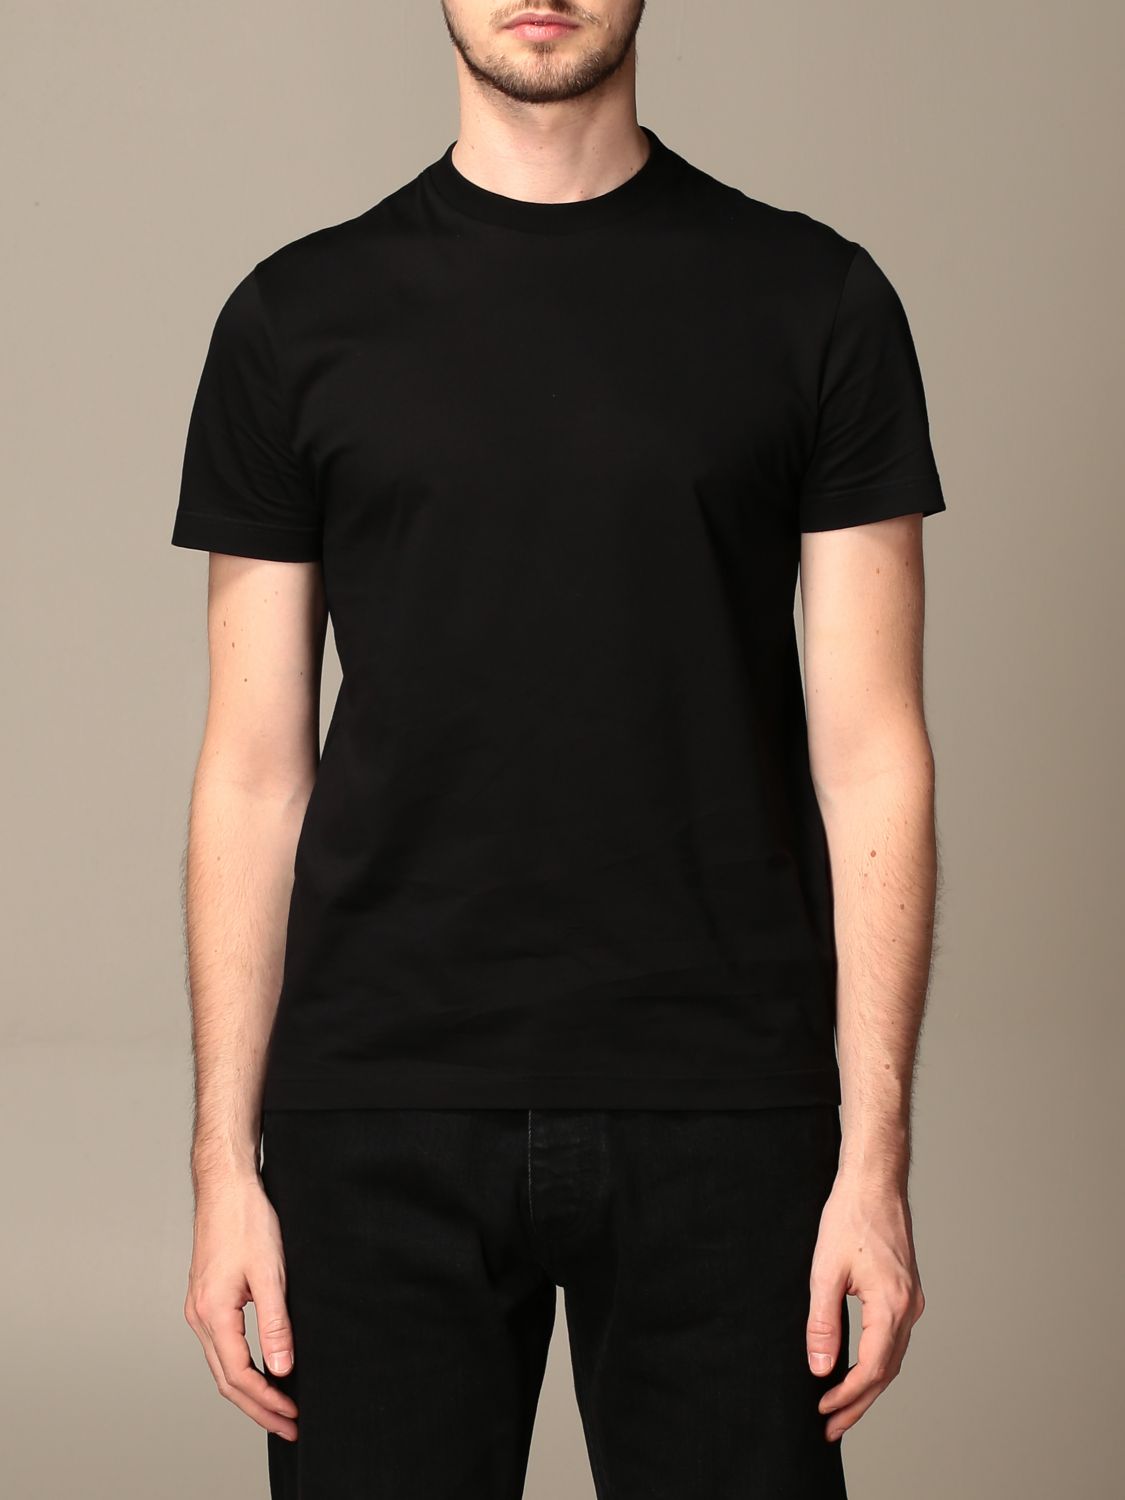 PRADA: Set of 3 cotton t-shirts with triangular logo - Black | Prada t ...